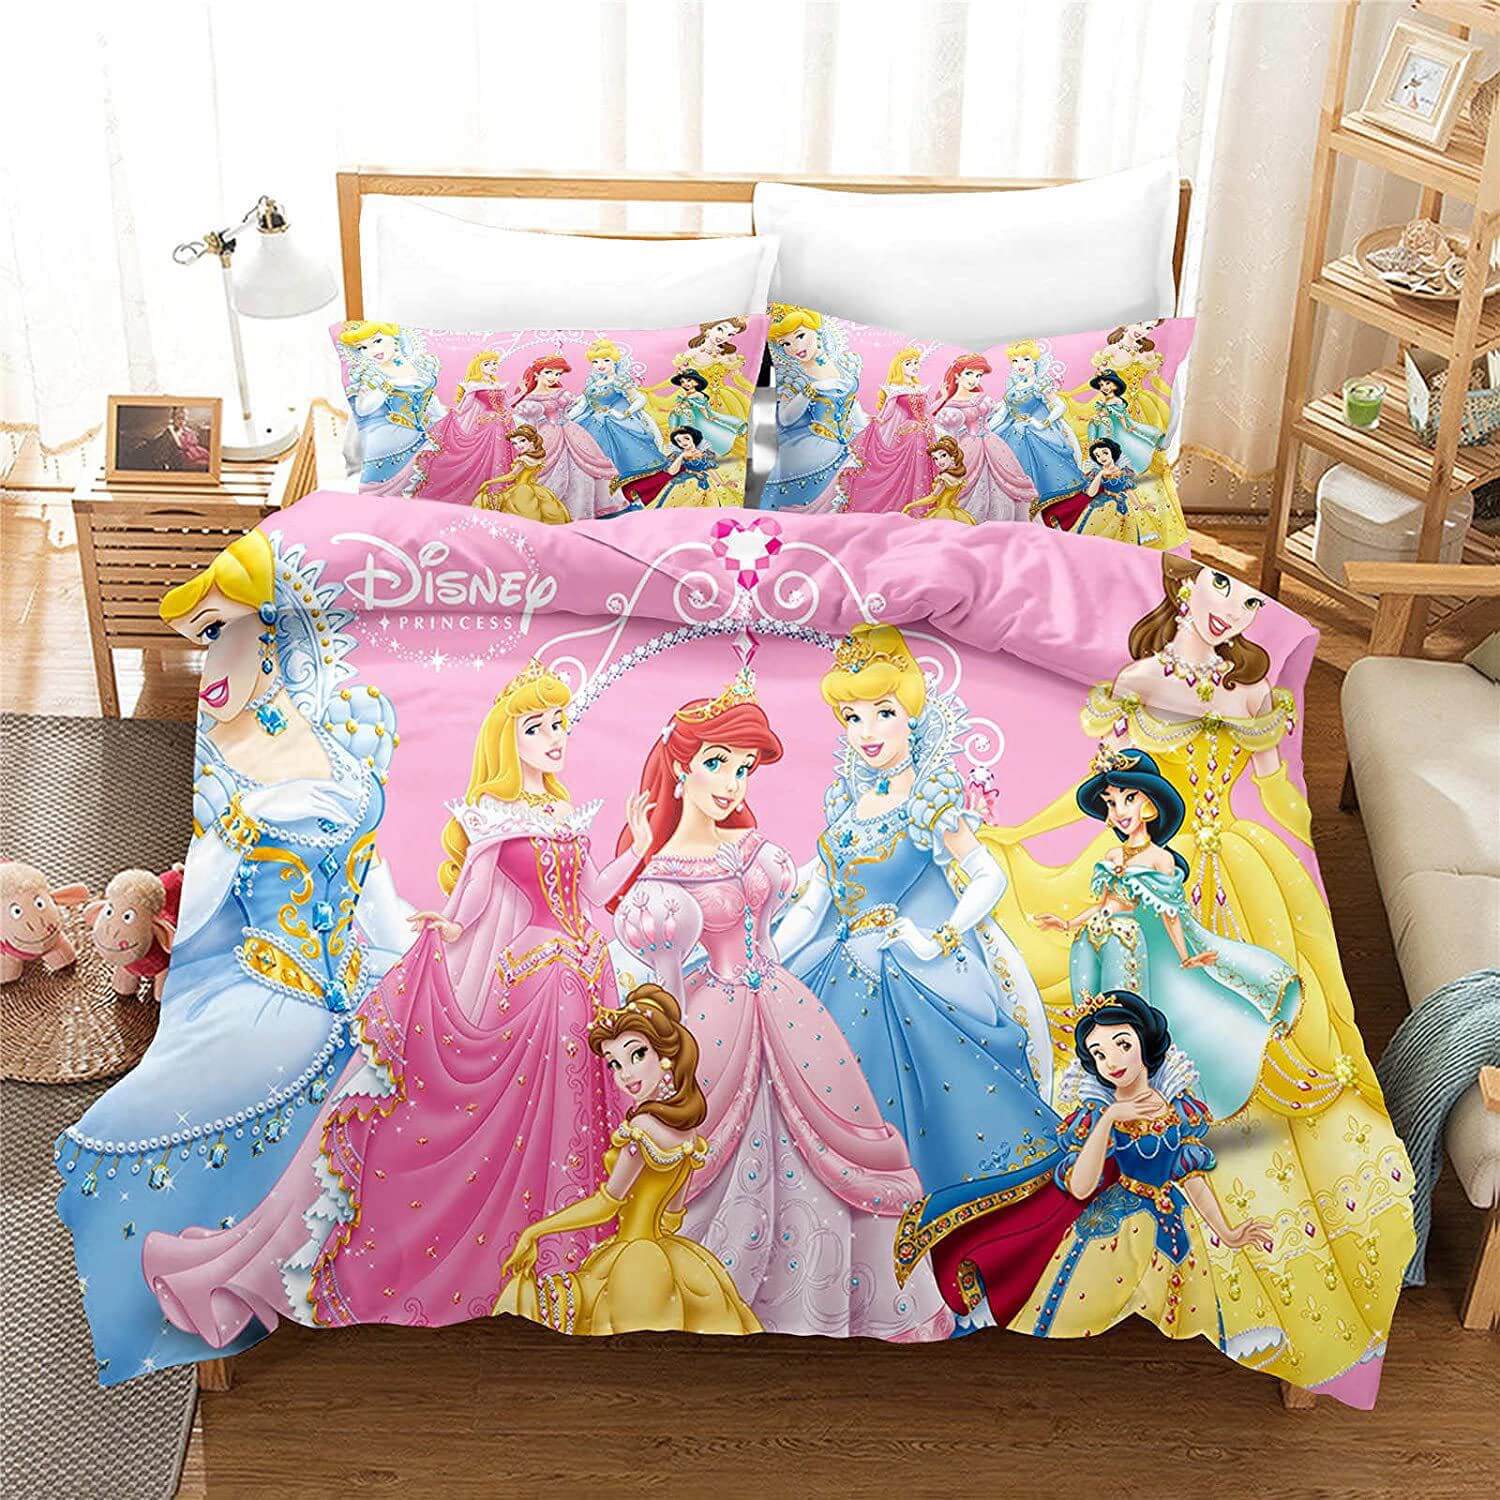 disney princess bedding set duvet cover without filler 5574 ouvpe